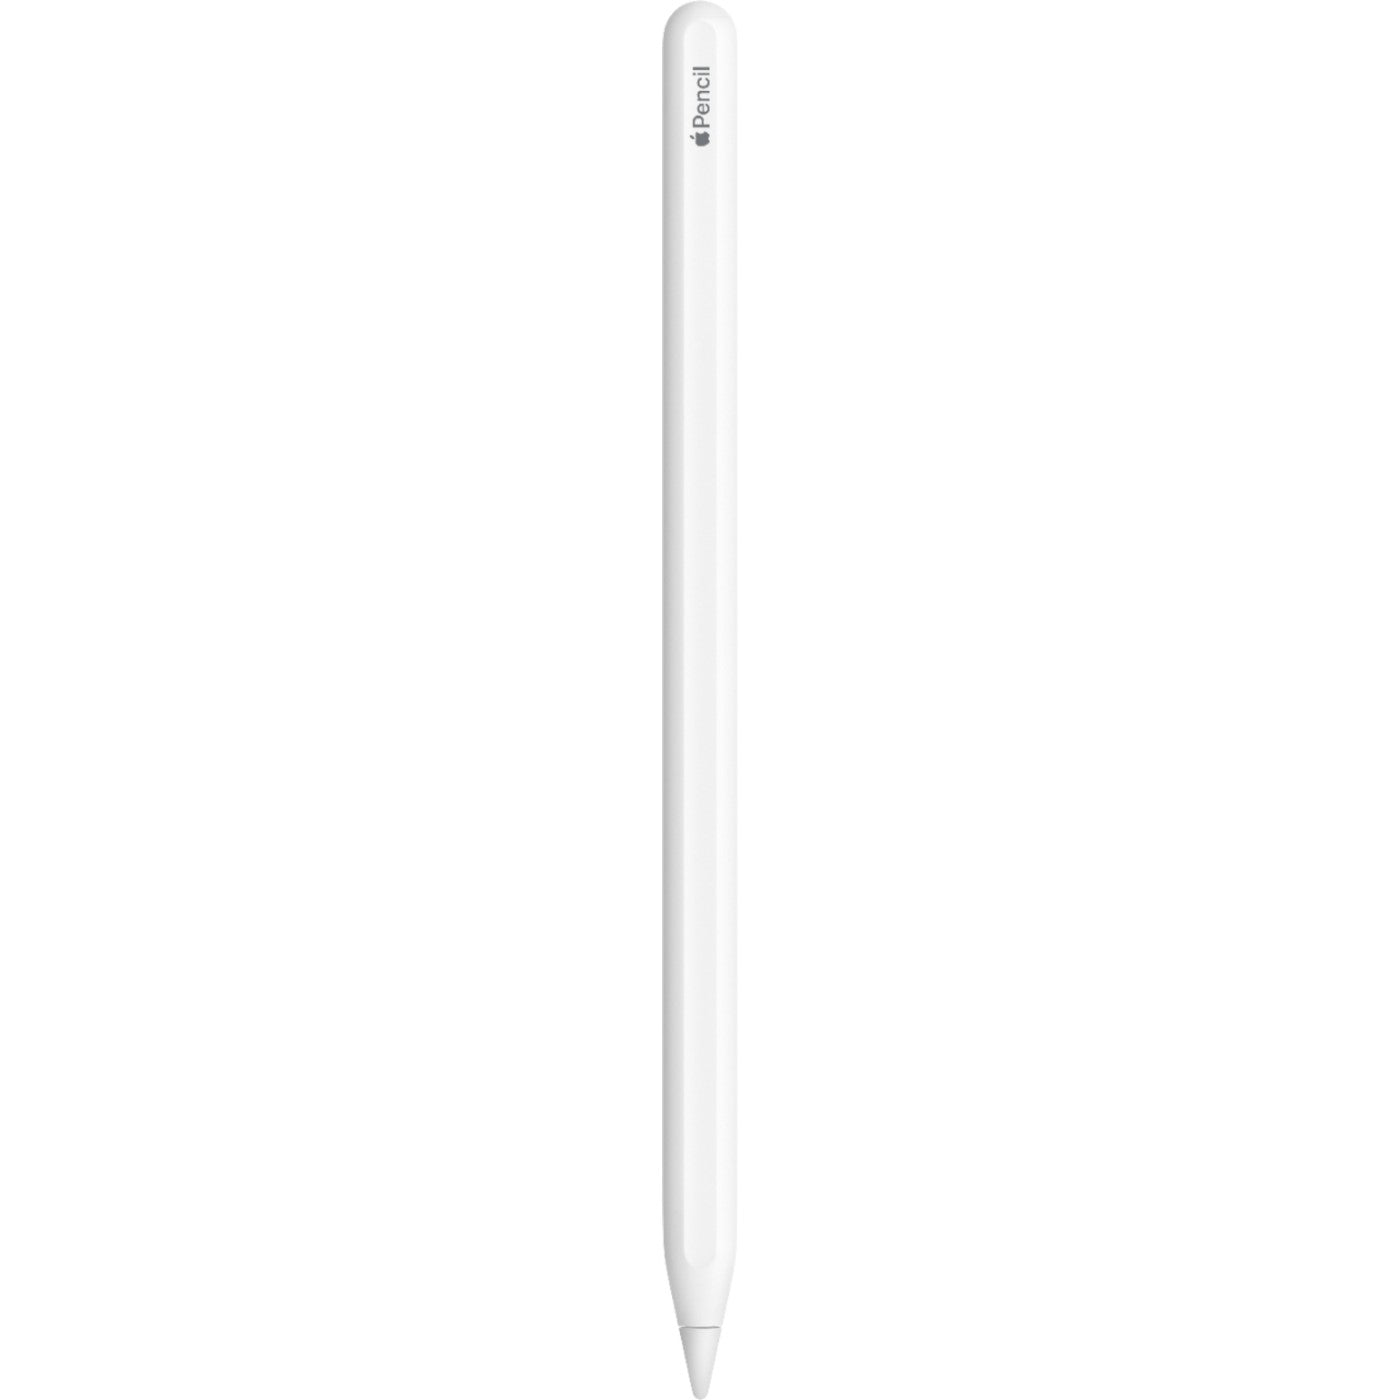 Apple Pencil 2nd Generation MU8F2AM/A